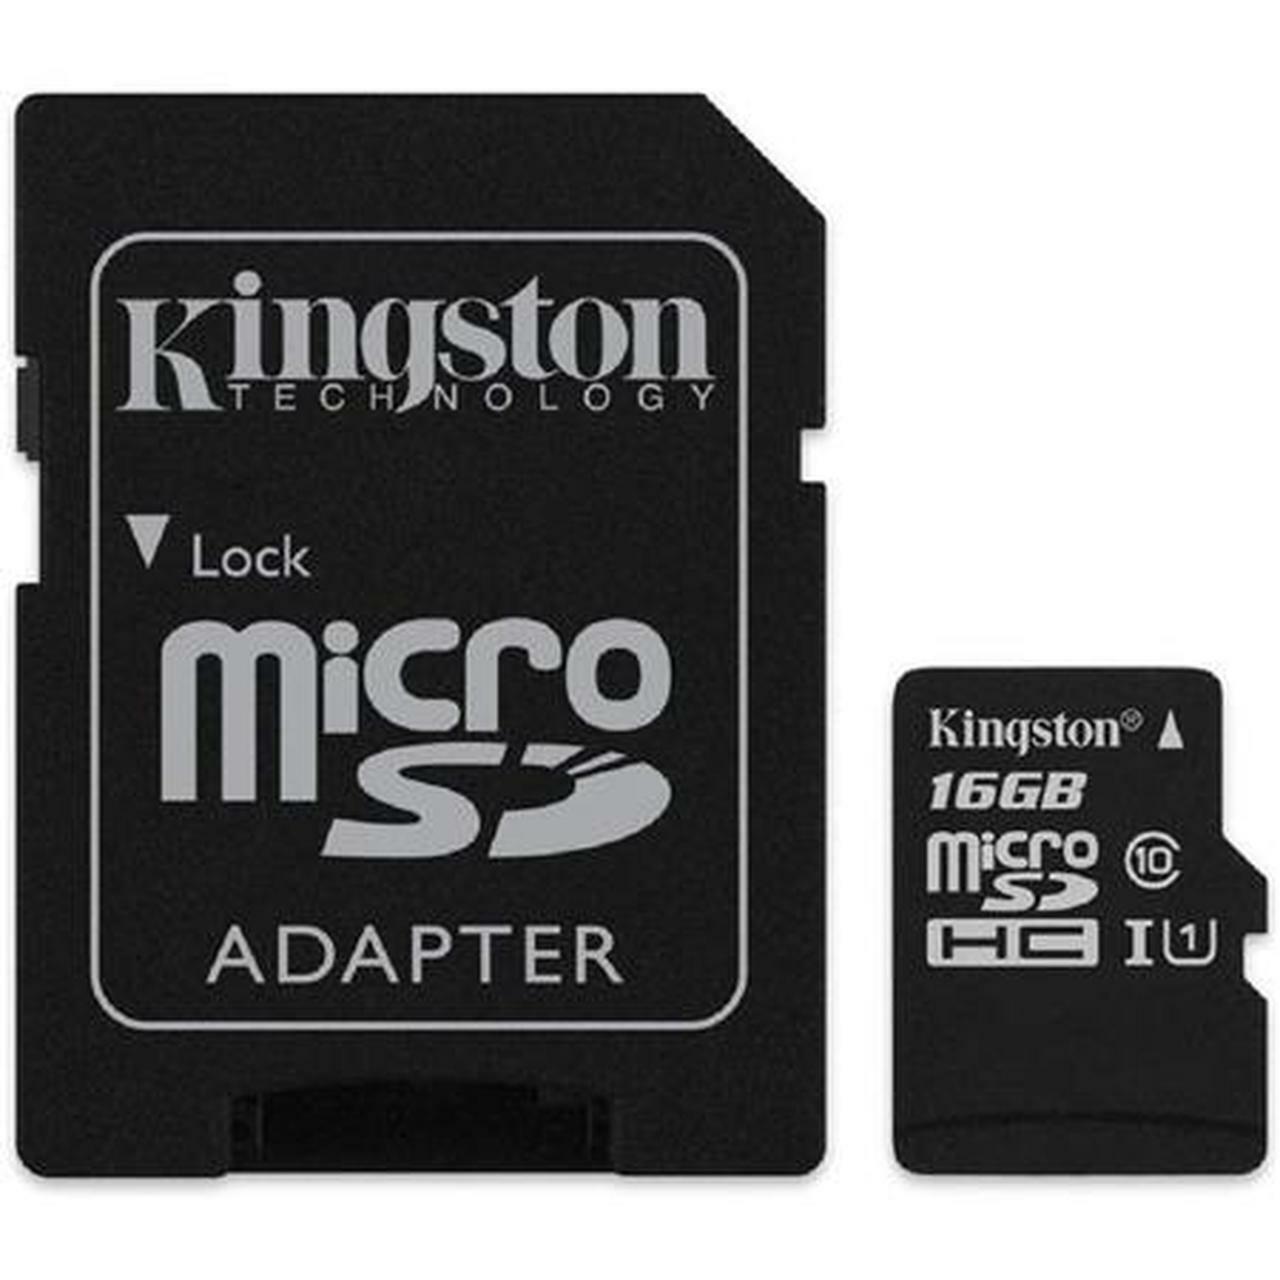 Maxim procent Kiezen Tascam SDCS/16GB Micro SD Card 43774034598 | eBay